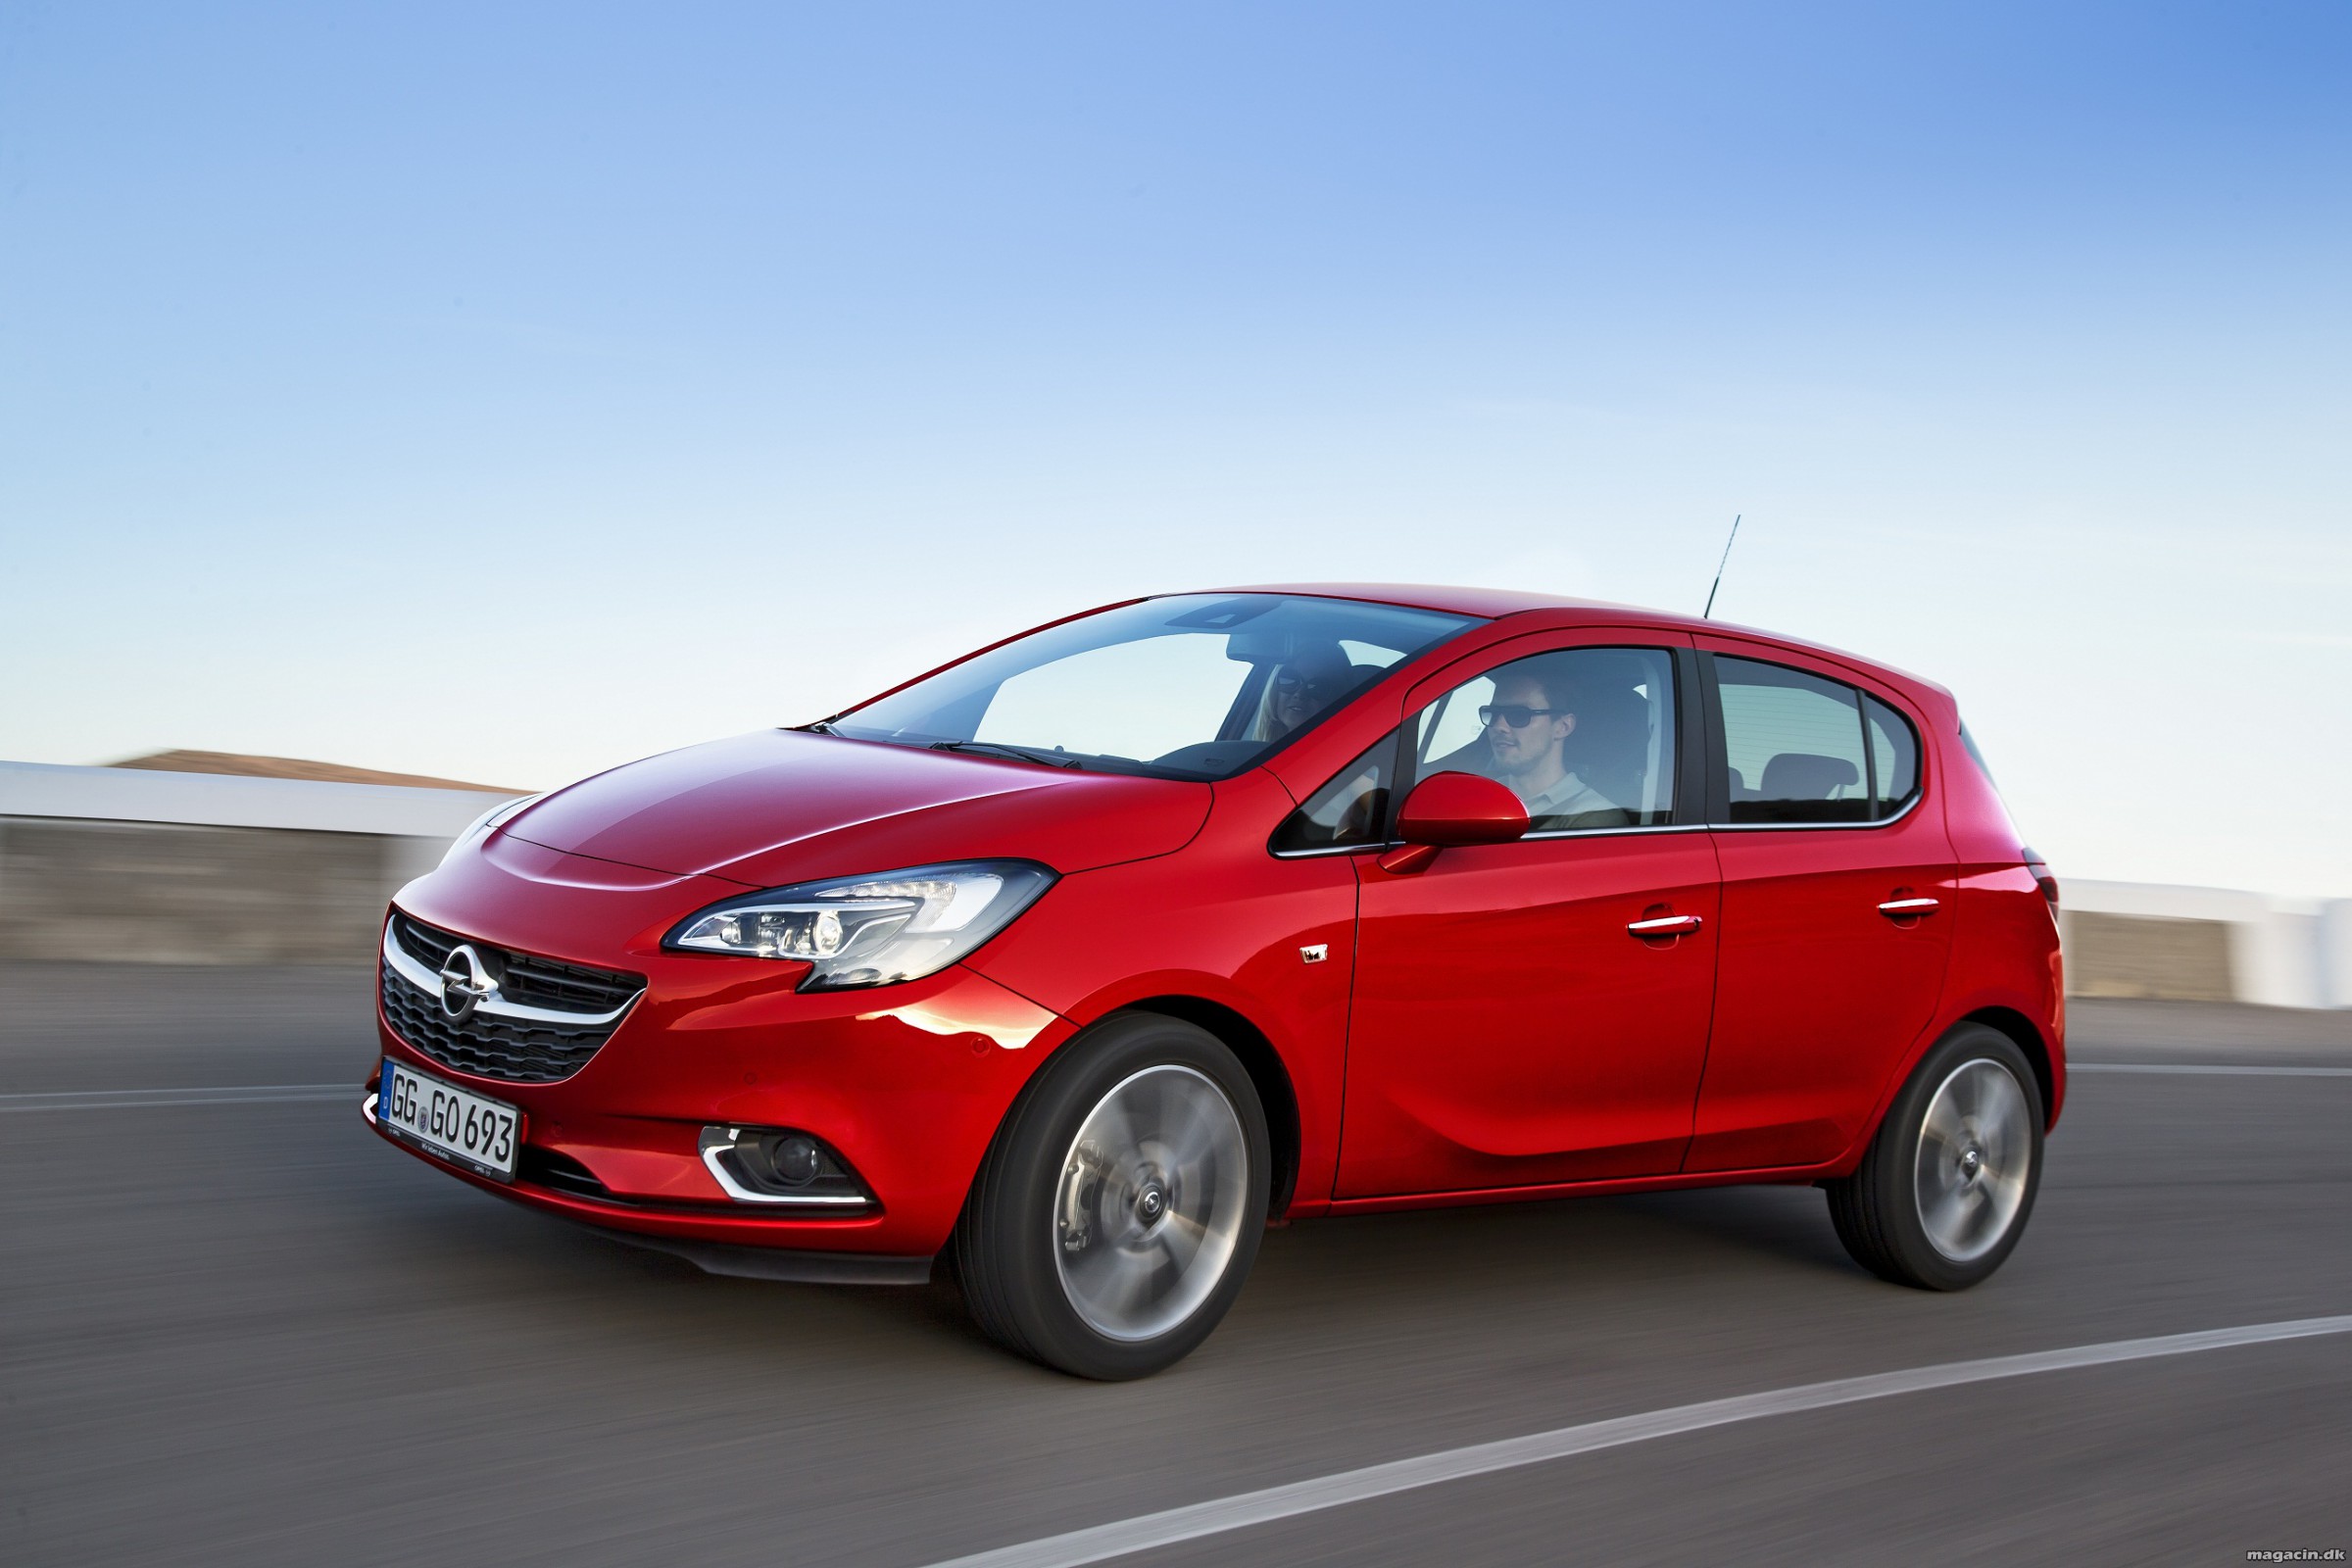 Femte generation af Opel Corsa